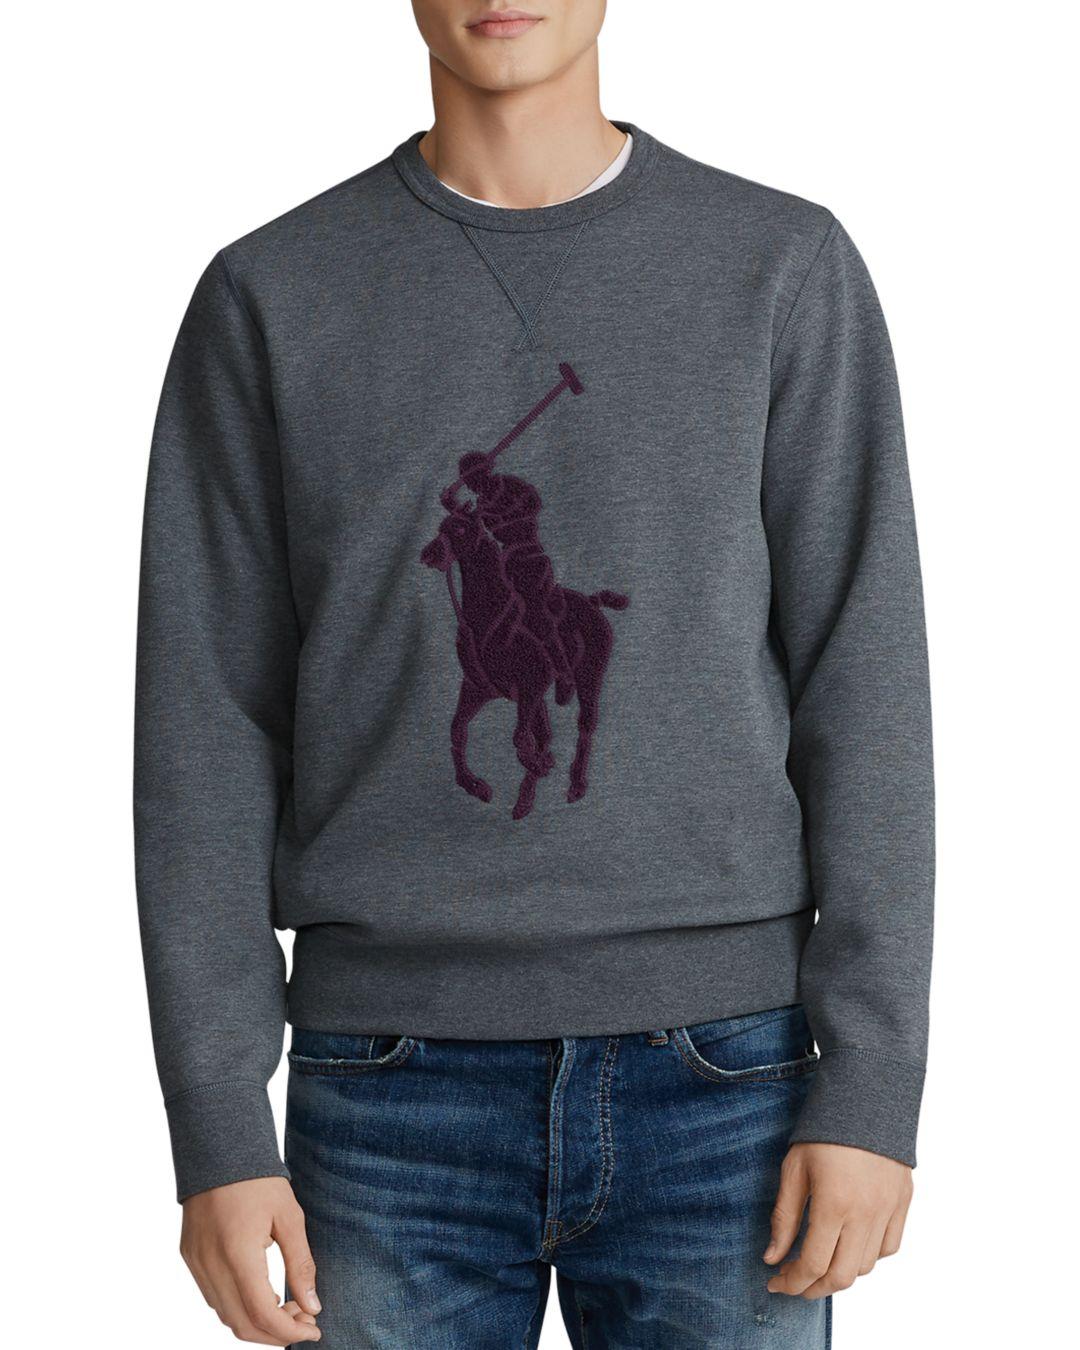 Polo Ralph Lauren Synthetic Big Pony Sweatshirt in Charcoal Heather (Gray)  for Men - Lyst